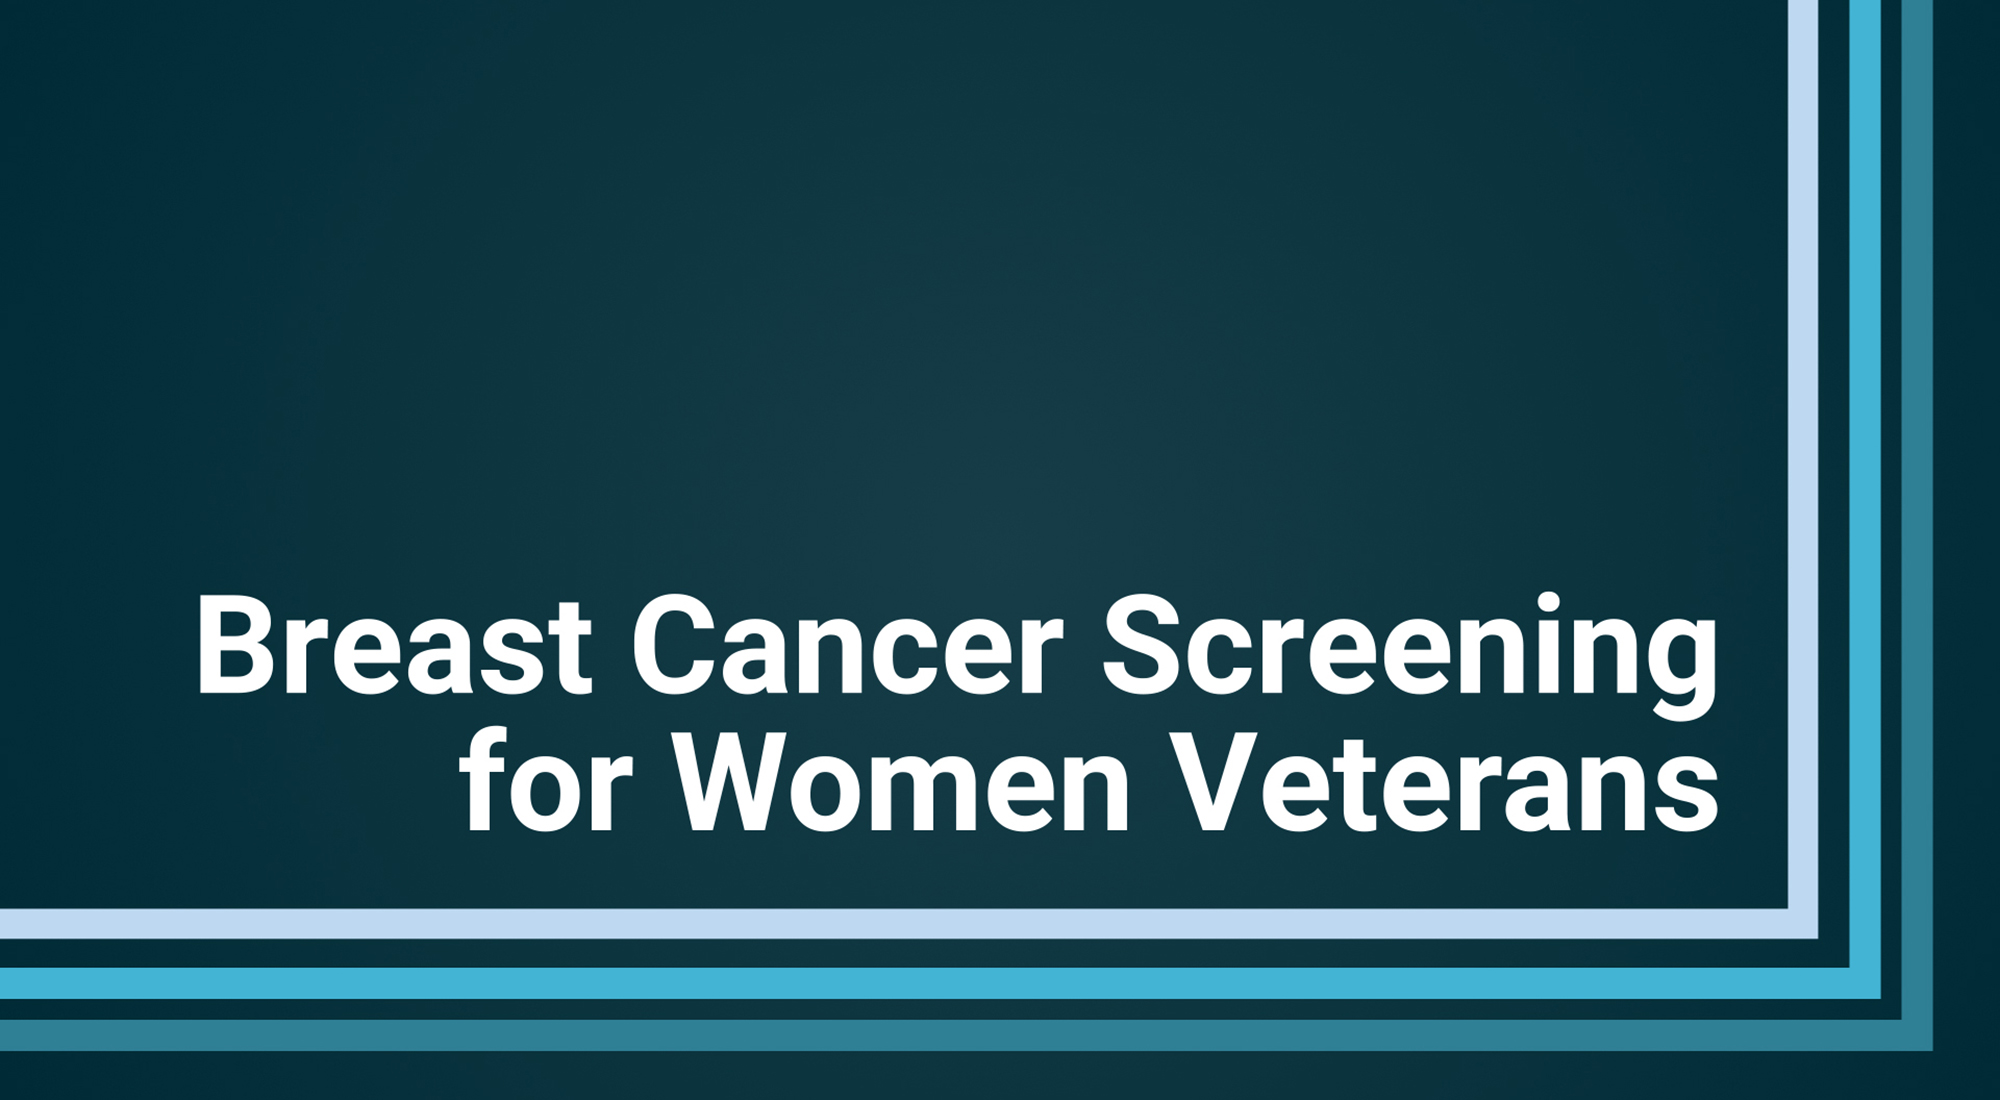 Breast cancer screening for women Veterans